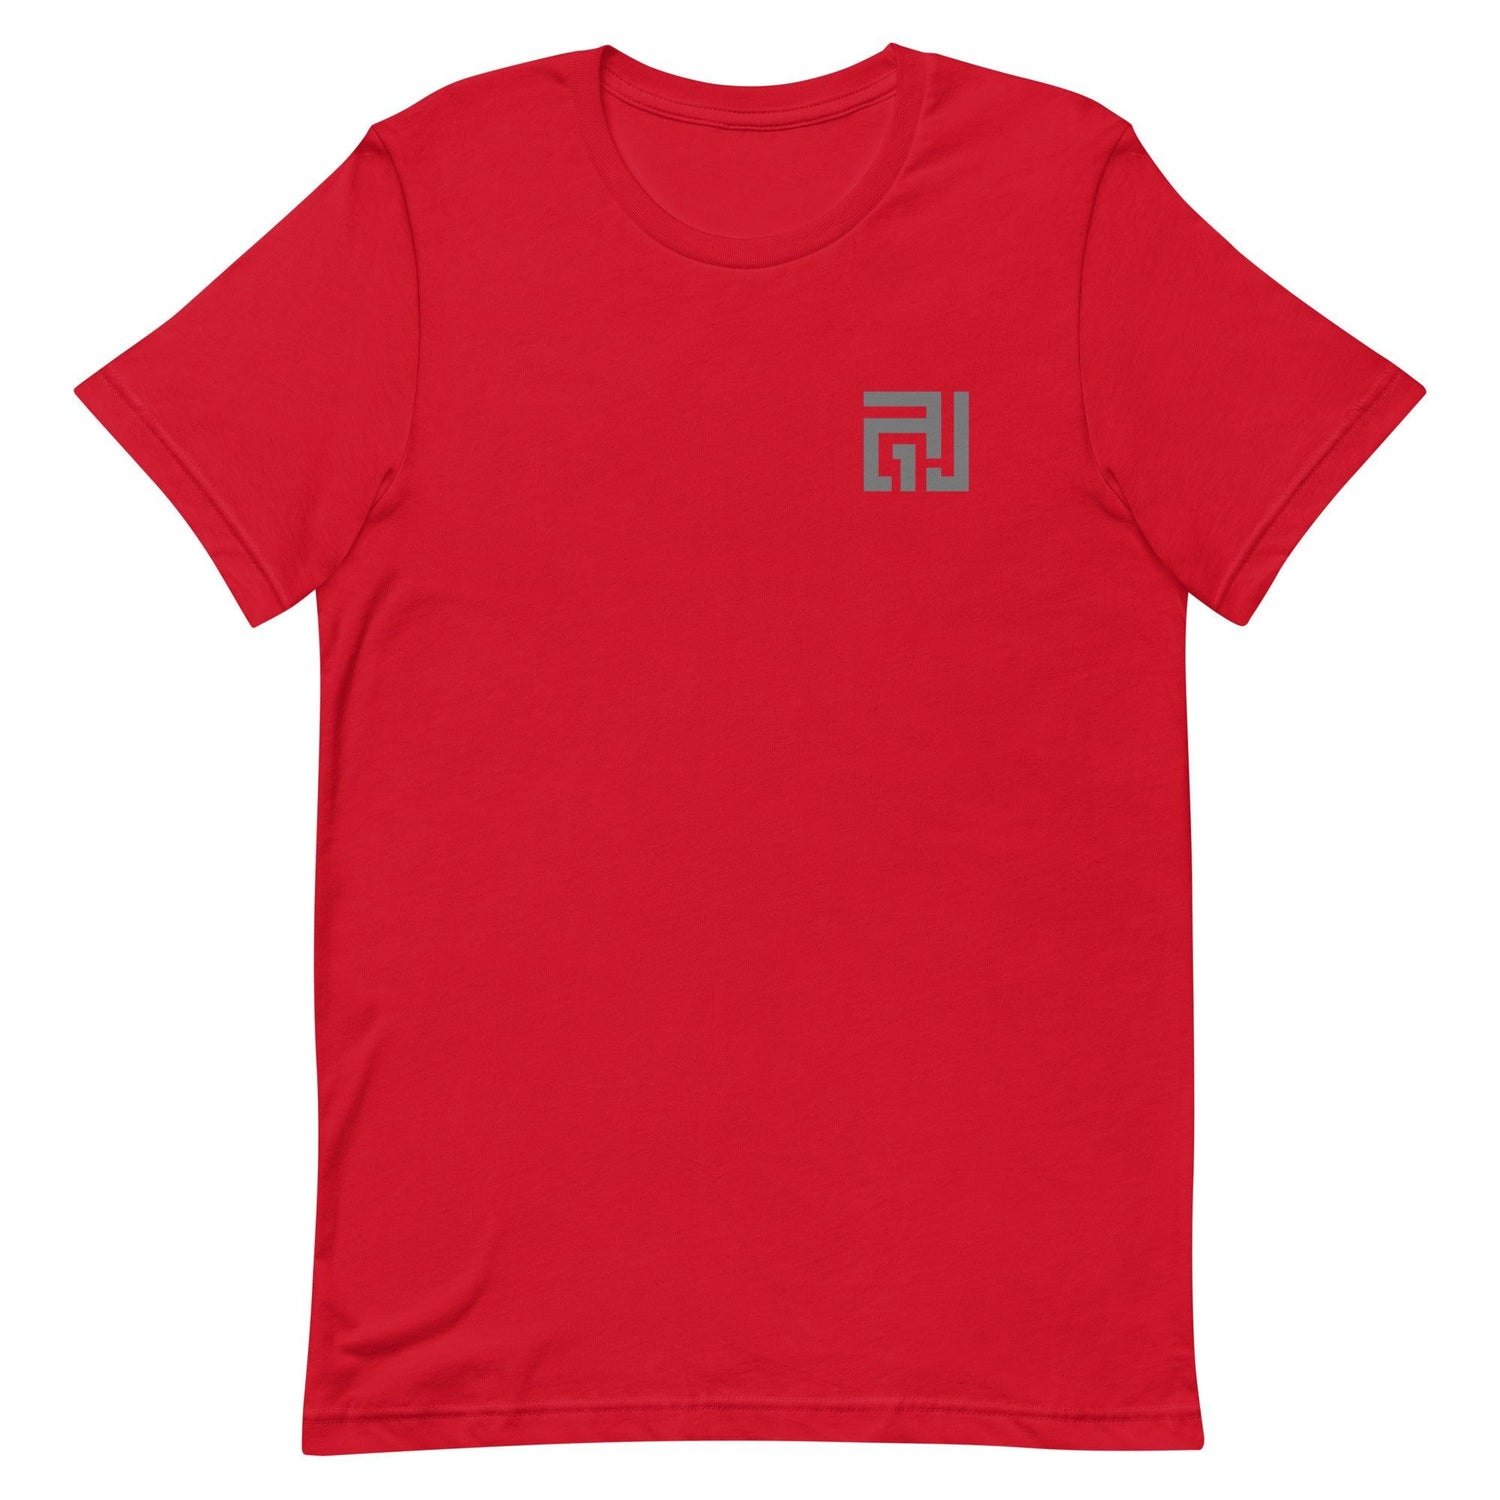 Andrew Jones "Essential" t-shirt - Fan Arch